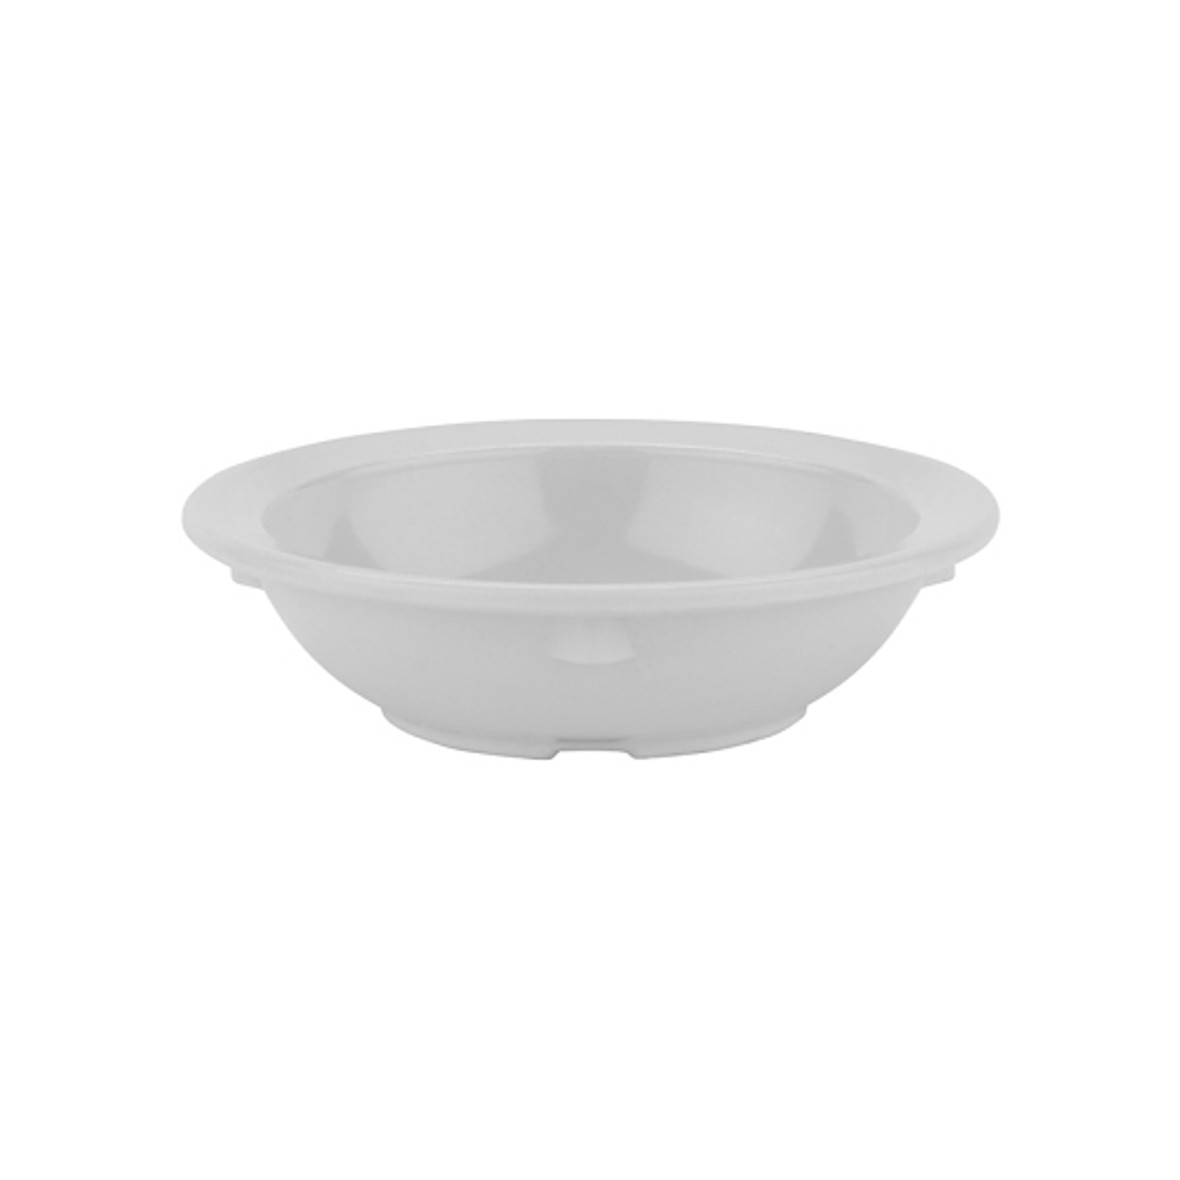 G.E.T. Enterprises 4.25 Inch 3.5 Ounce Rimmed White Bowl, 4 Dozen